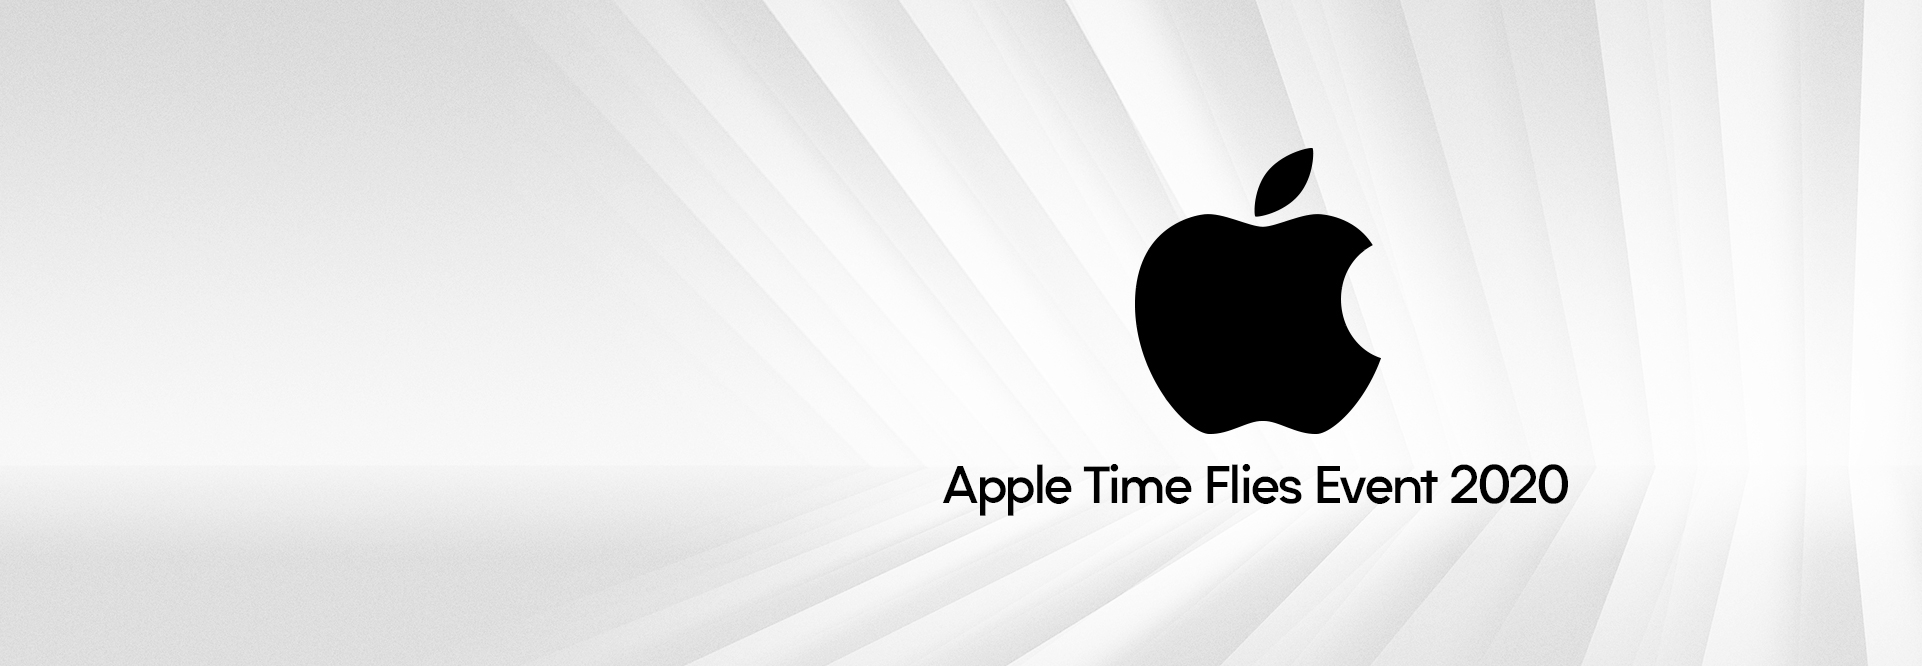 Apple Time Flies Event 2020